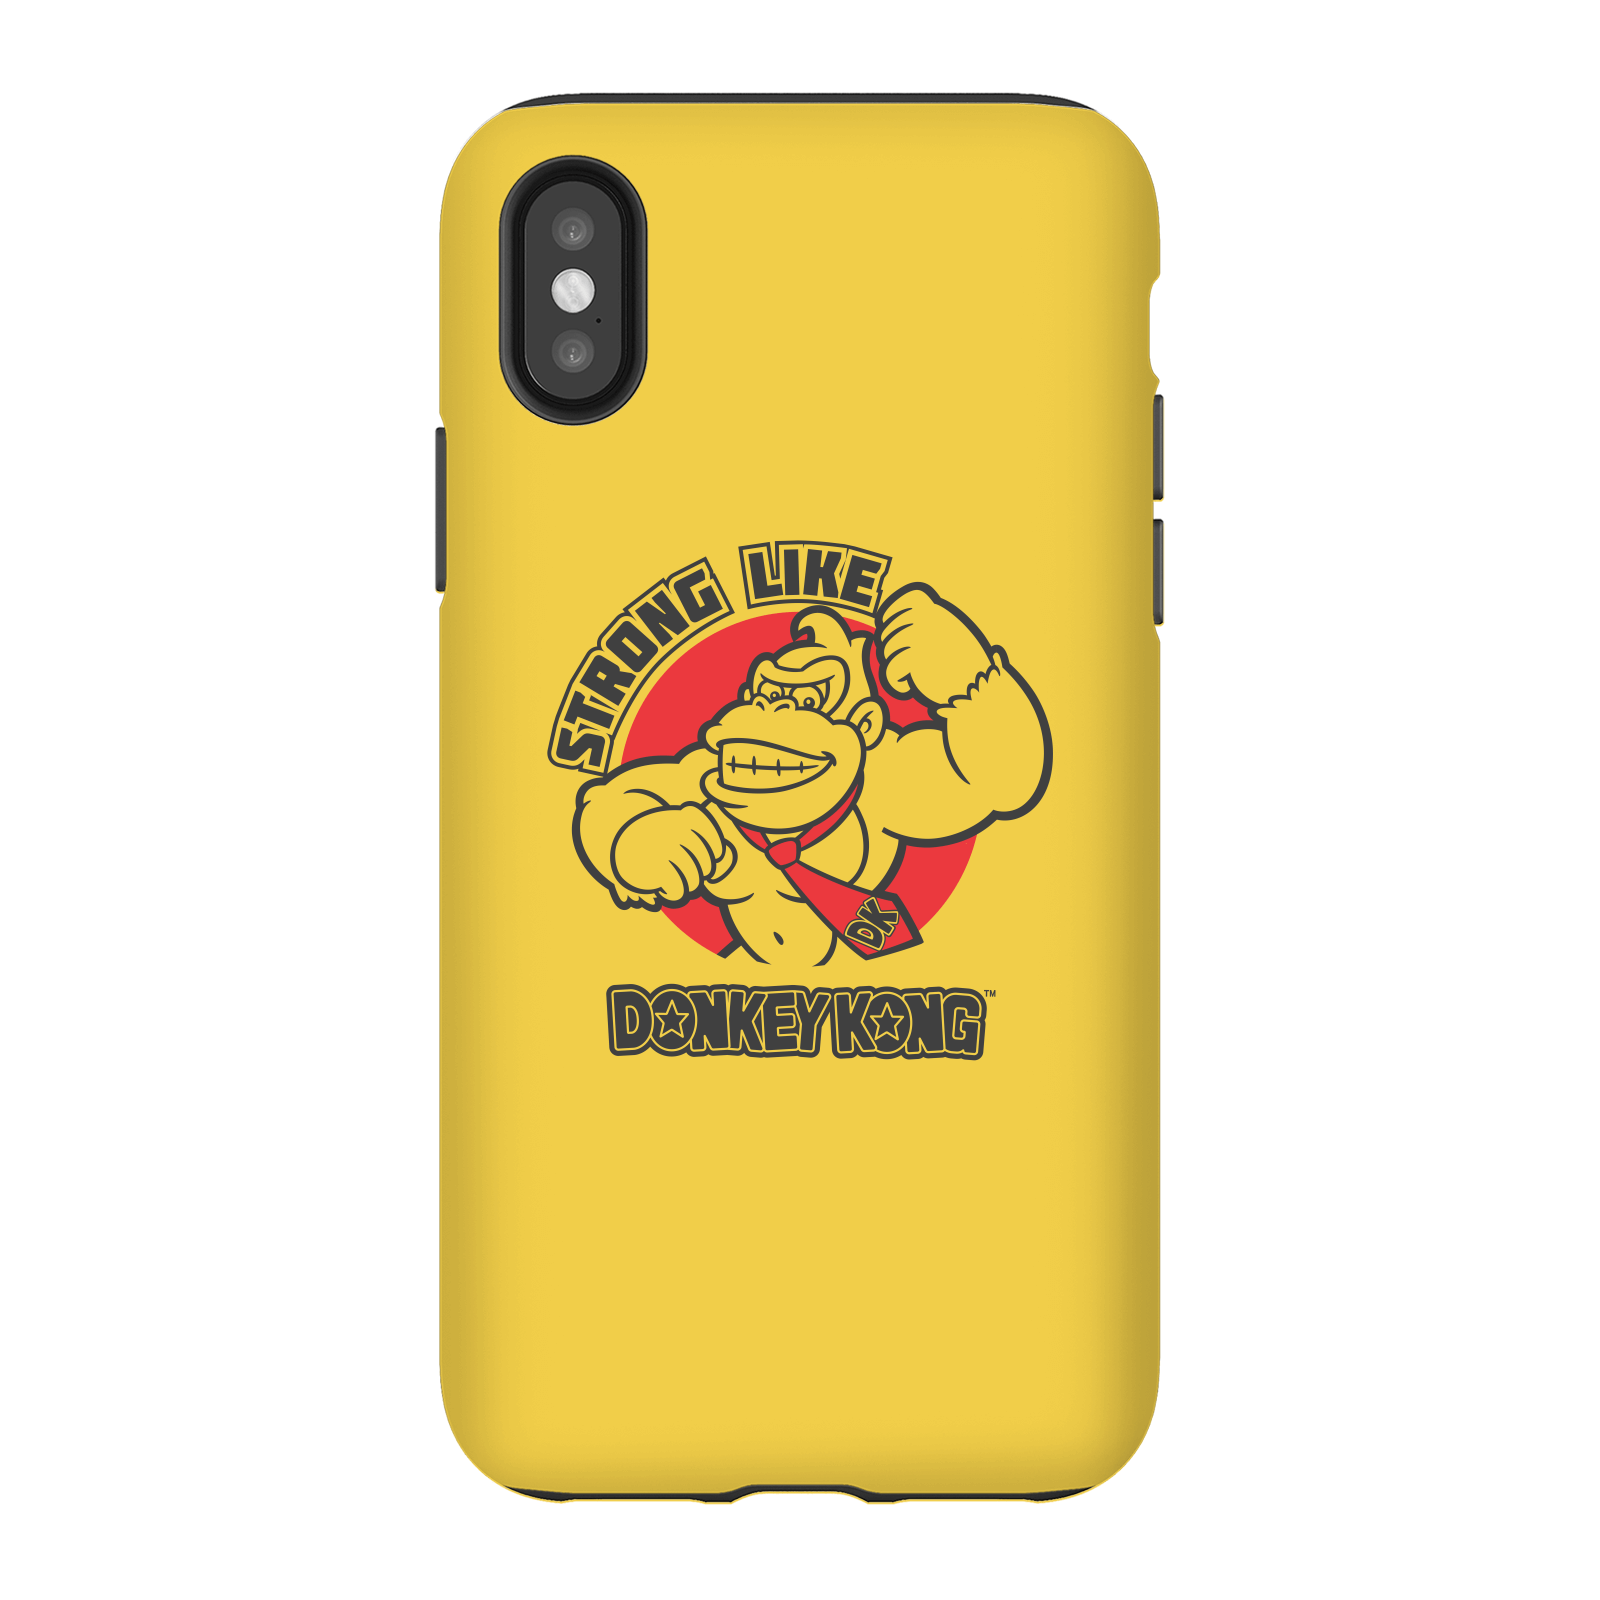 Nintendo Donkey Kong Strong Like Donkey Kong Phone Case - iPhone X - Tough Case - Gloss